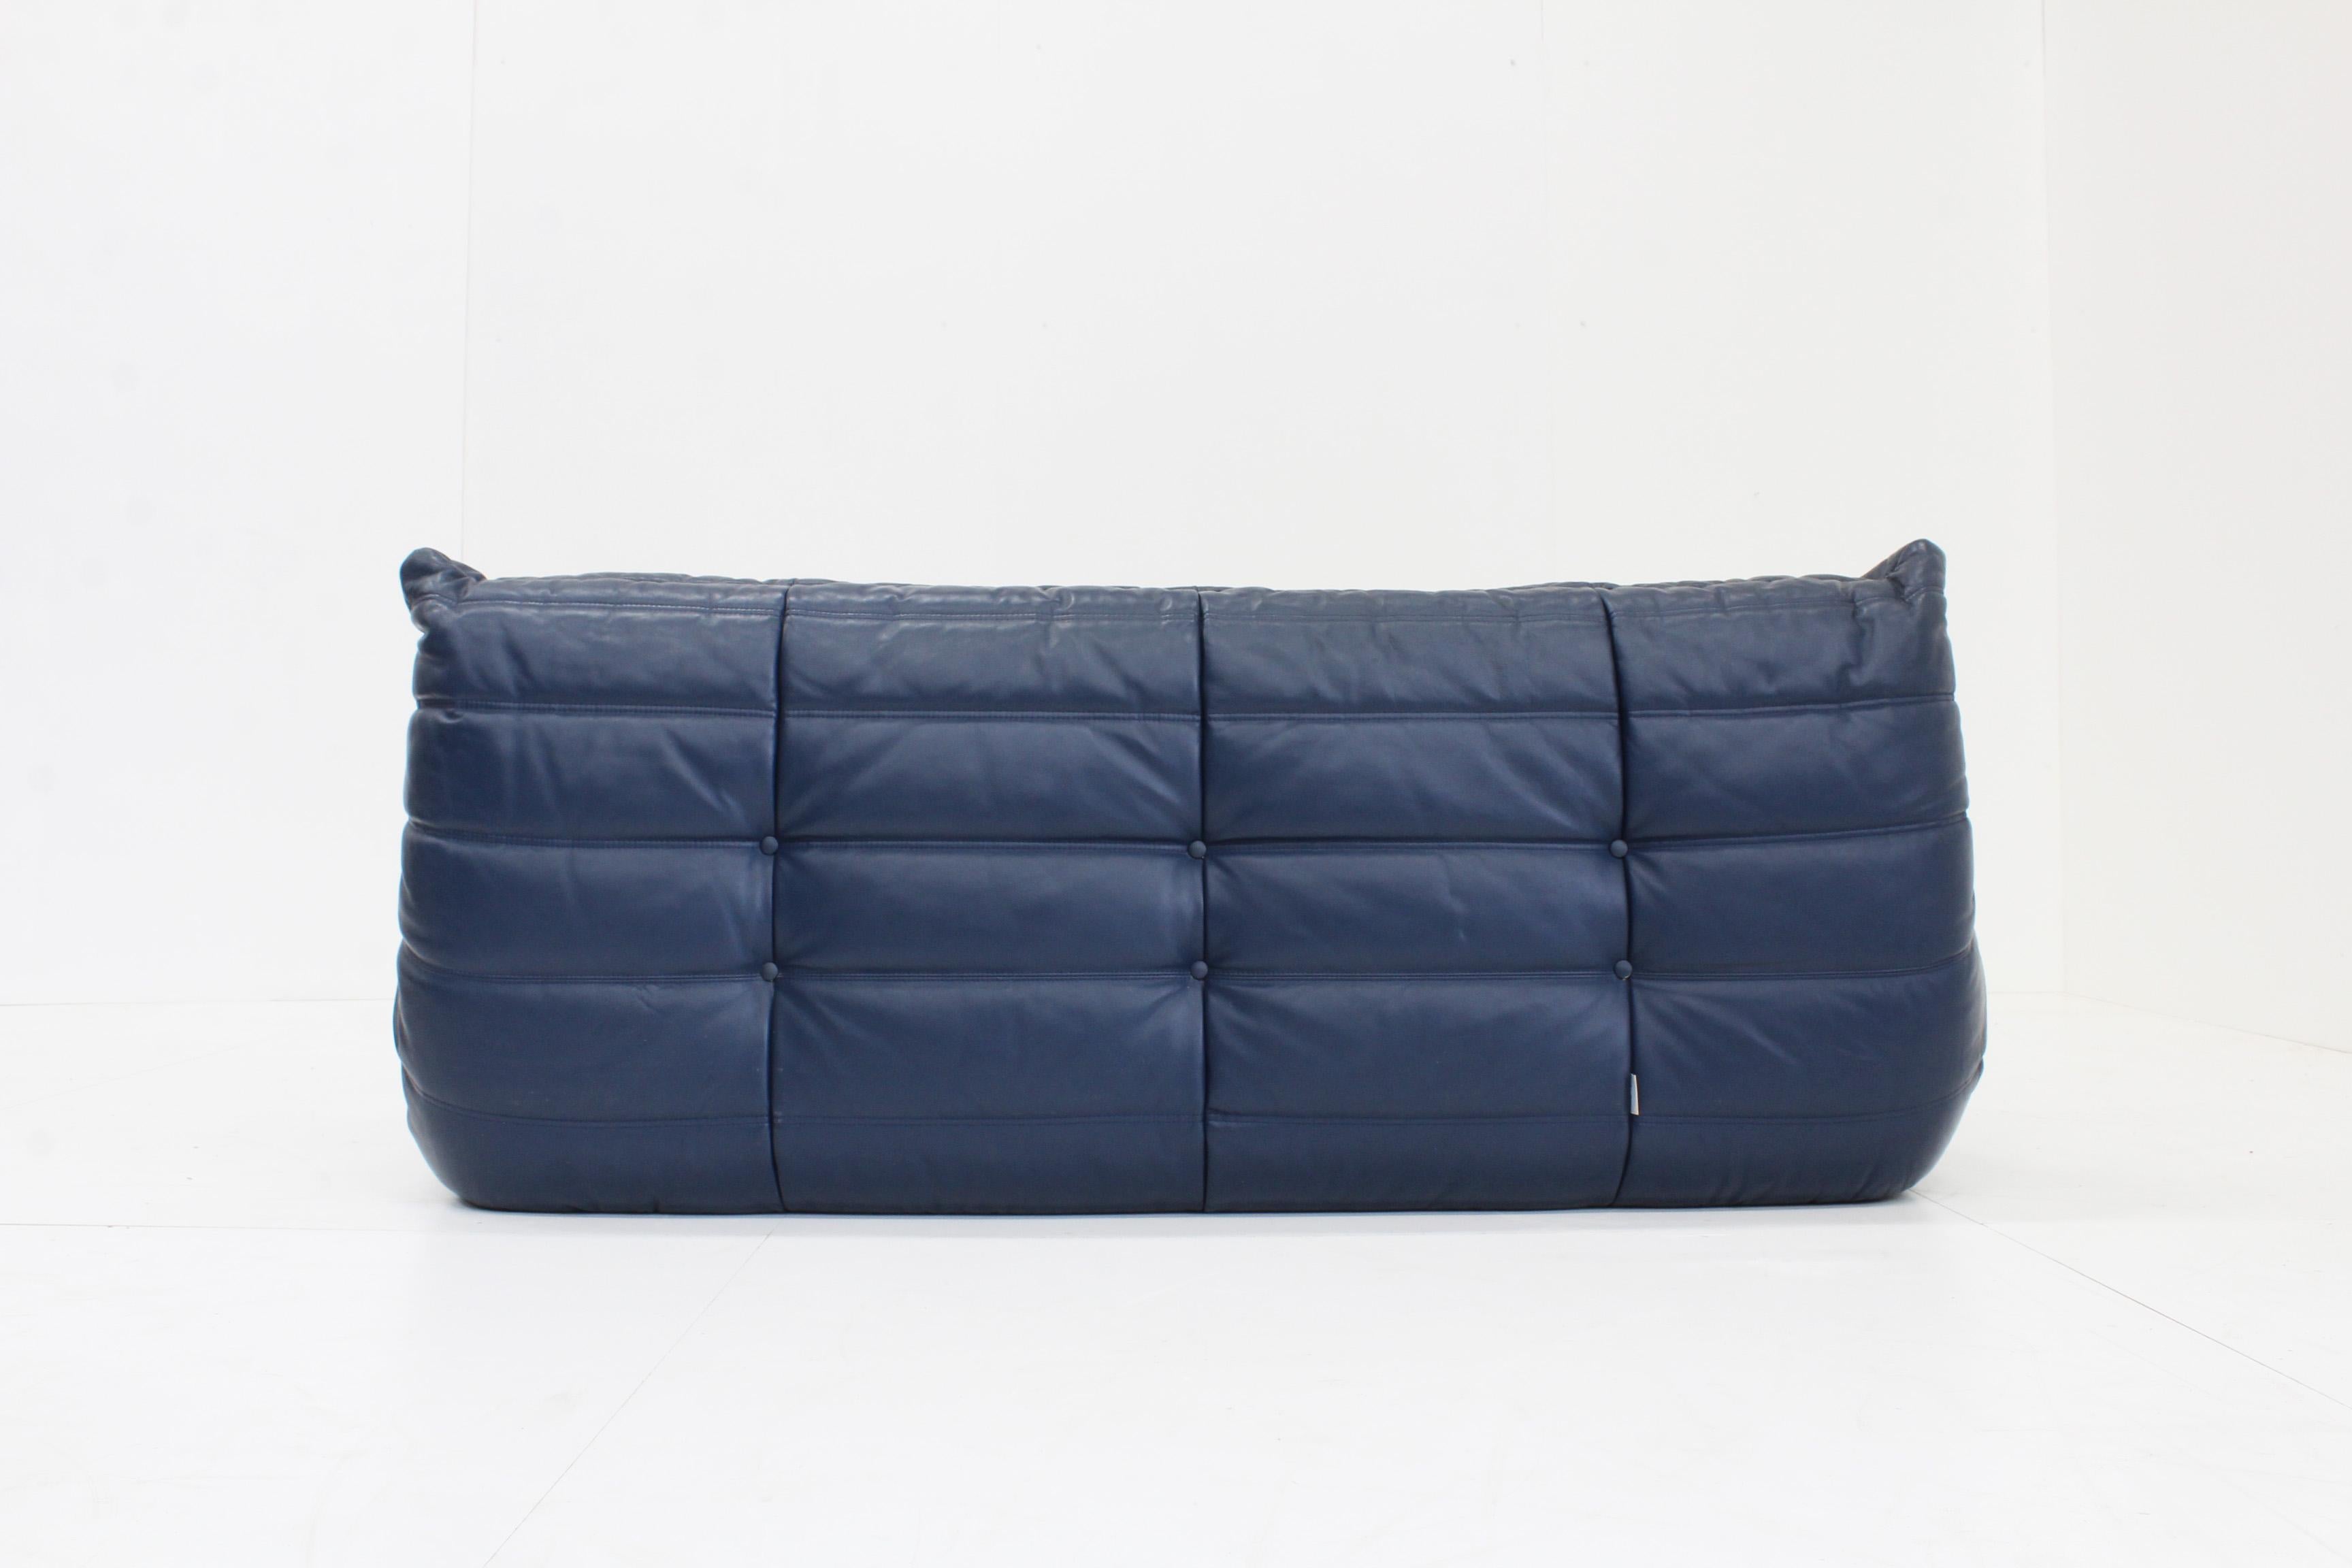 Late 20th Century Original Vintage Togo ligne Roset 3 seater sofa in blue leather